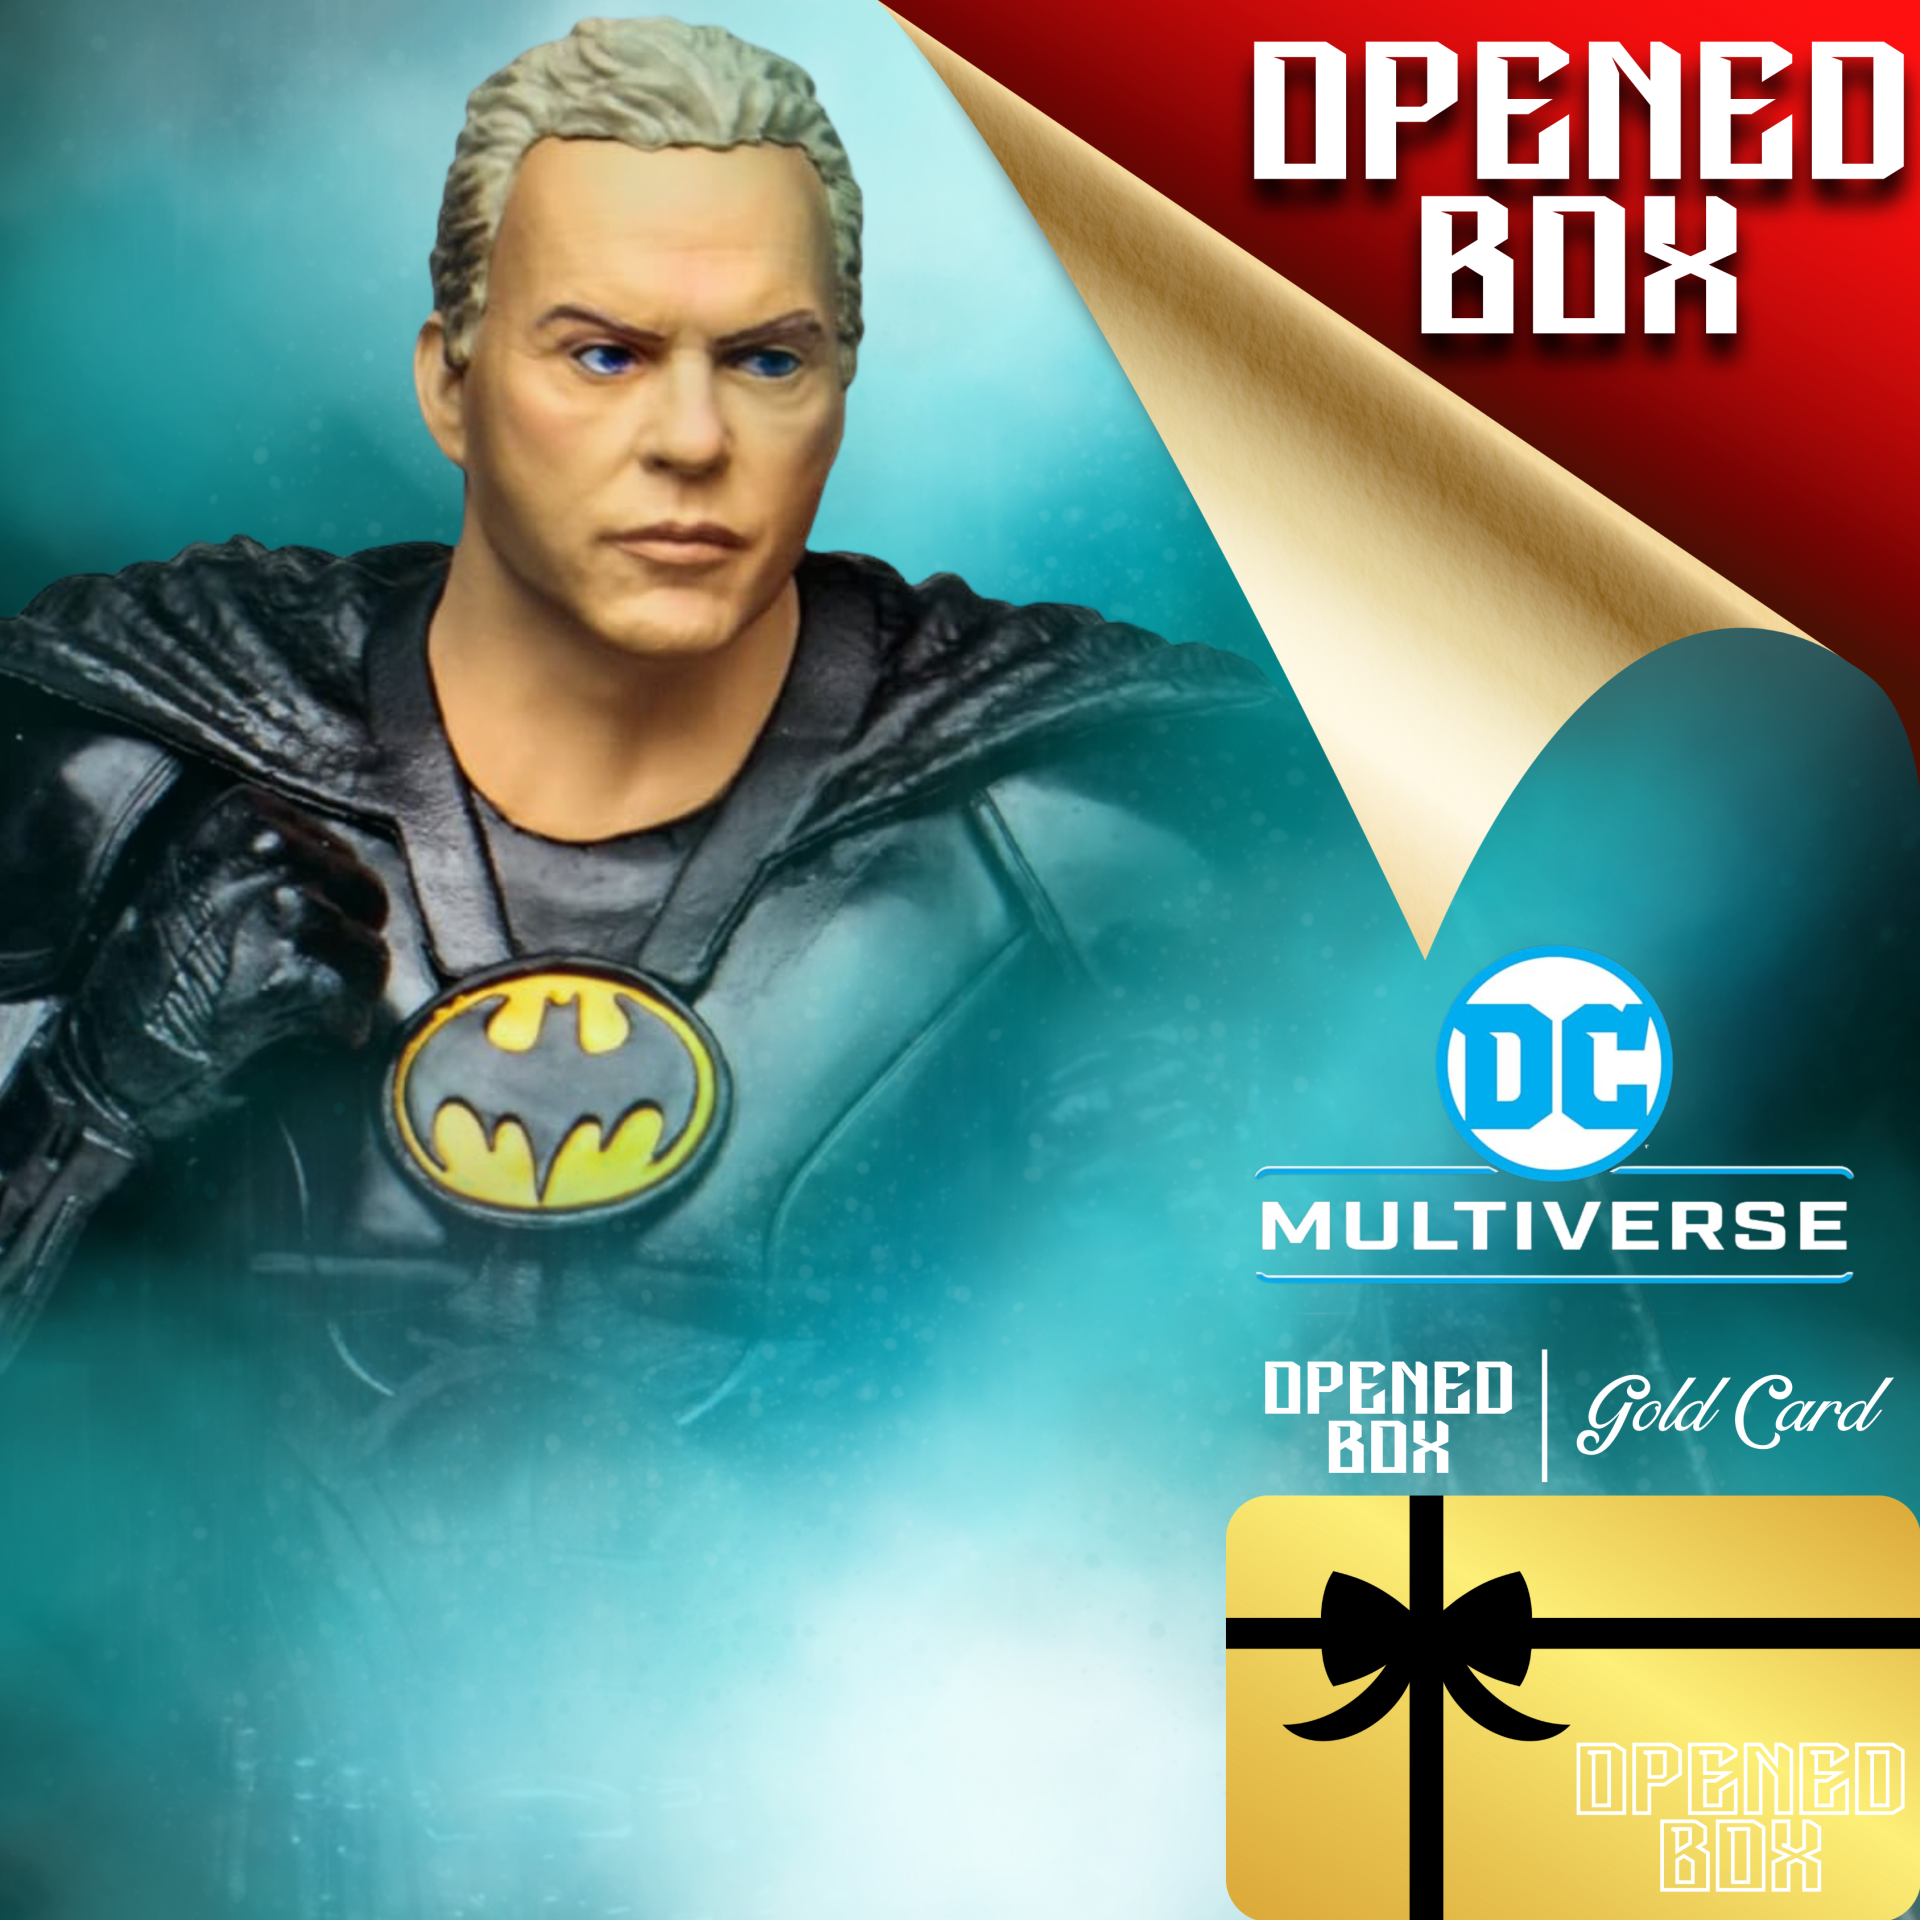 (OPENED BOX | GOLD CARD) - DC Multiverse The Flash Movie: (Gold Label) Batman Unmasked (1989, Michael Keaton) Heykel Figür